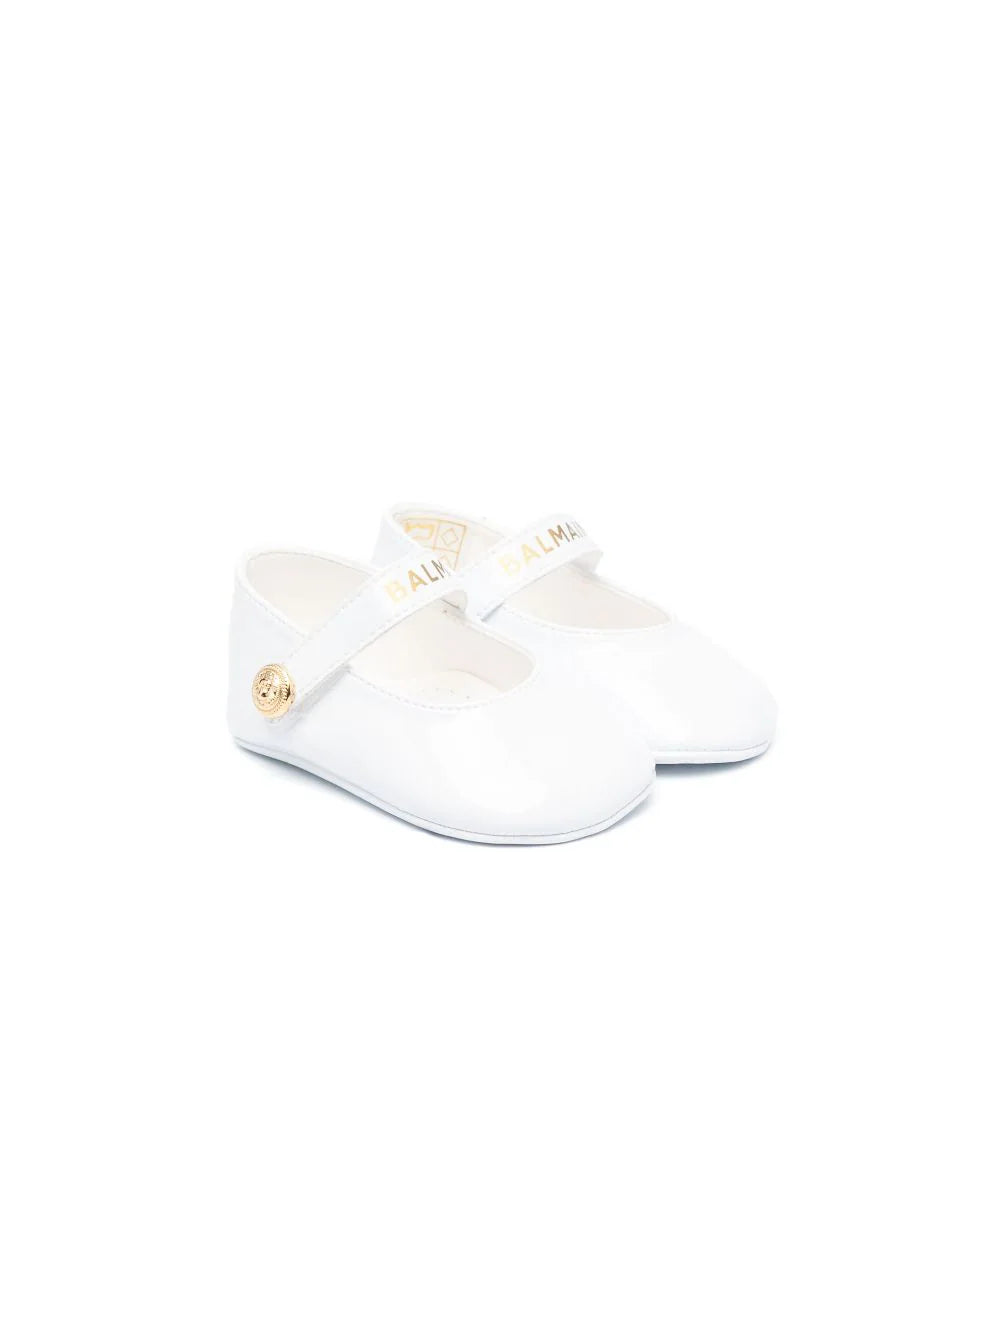 Balmain Baby Girls White Patent Pre-Walker Shoes